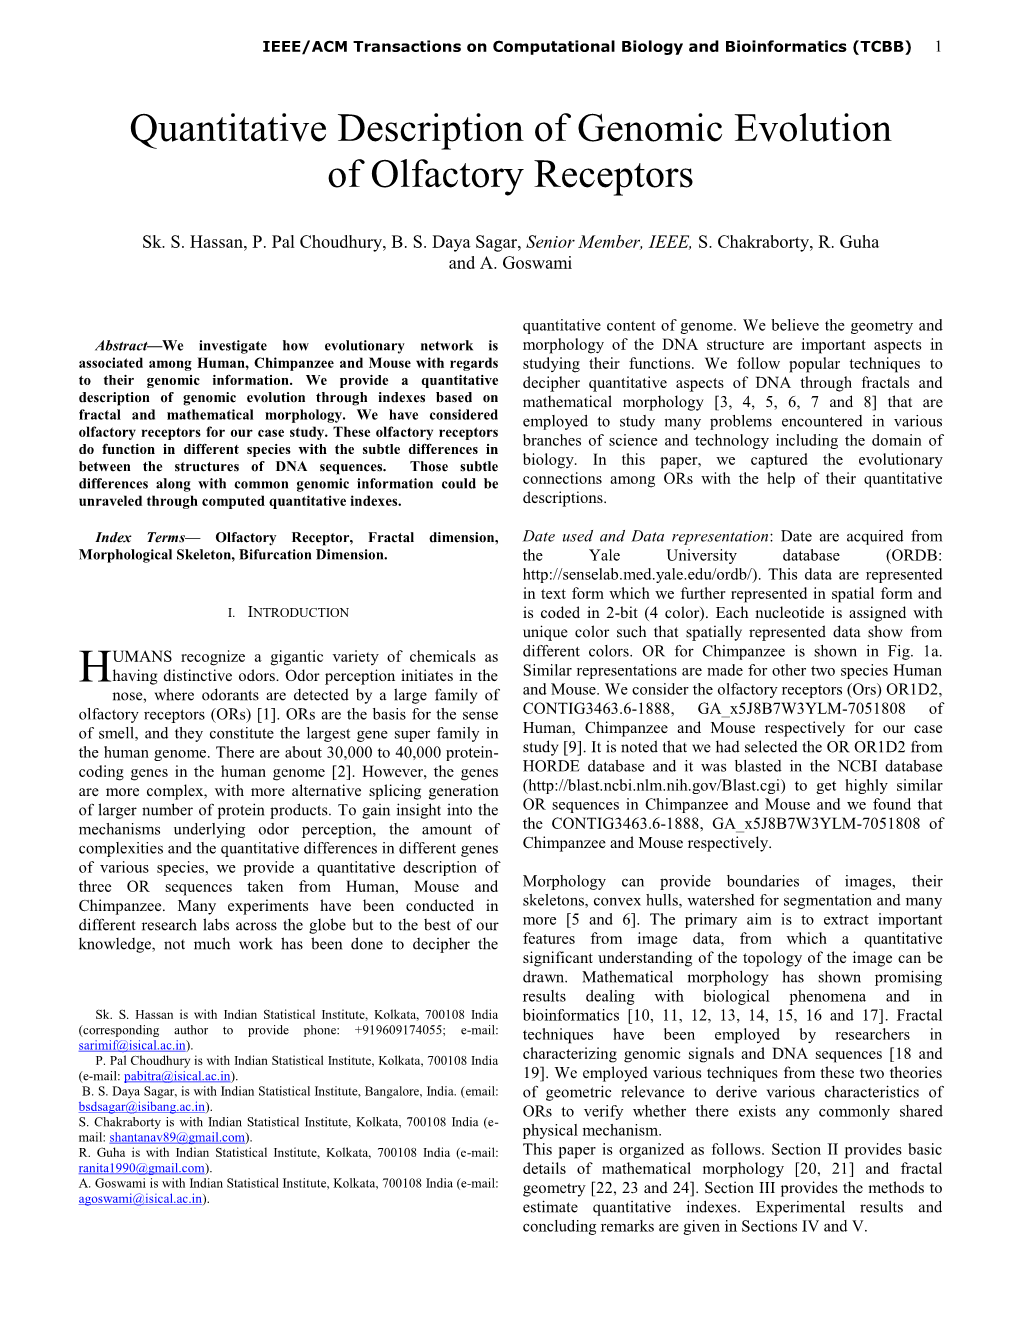 Quantitative Description of Genomic Evolution of Olfactory Receptors